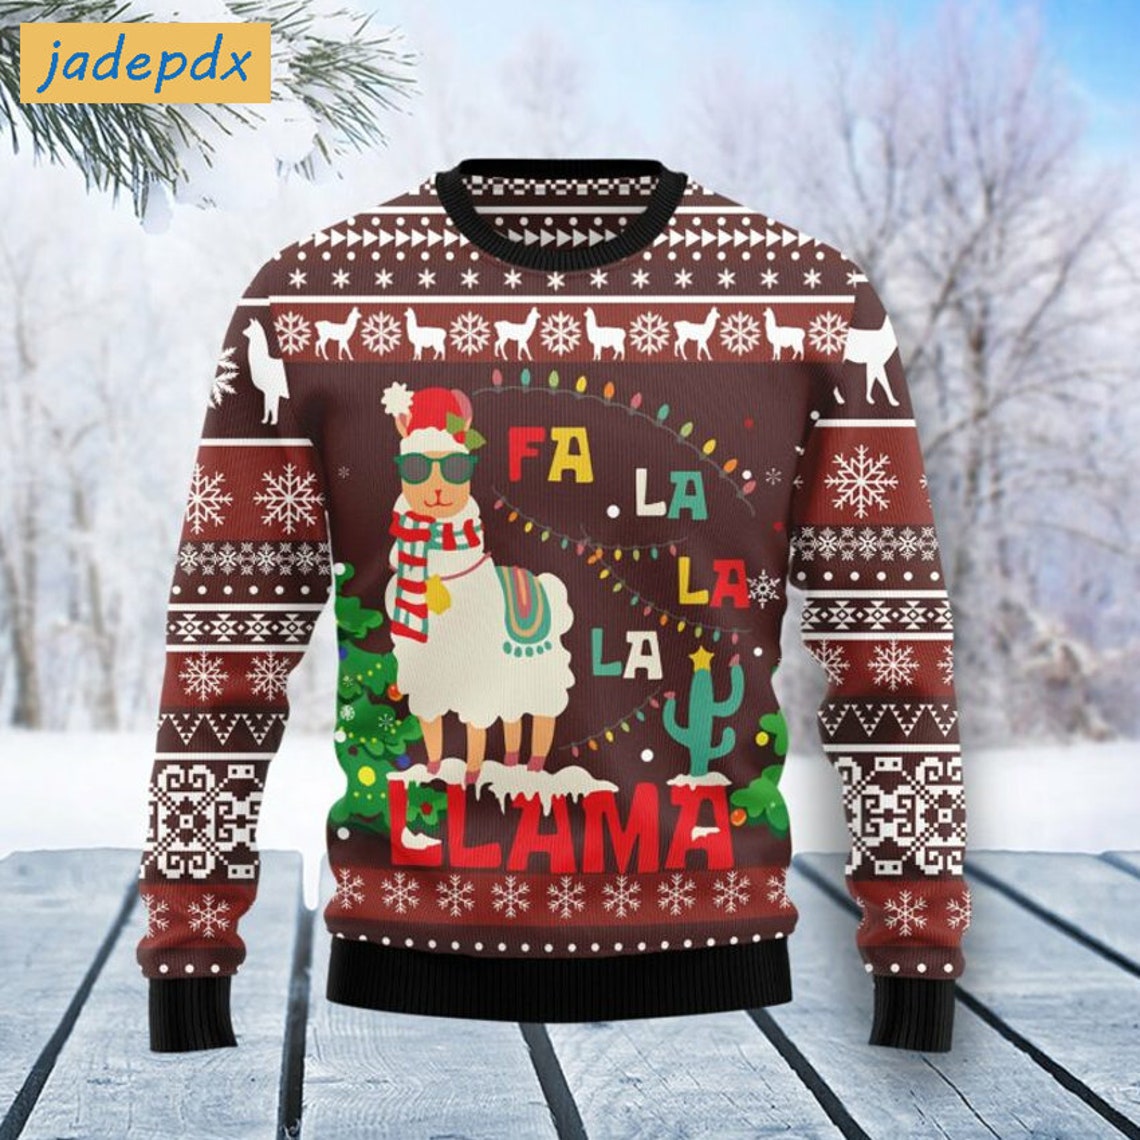 Pittsburgh Penguins Hohoho Mickey Christmas Ugly Sweater –